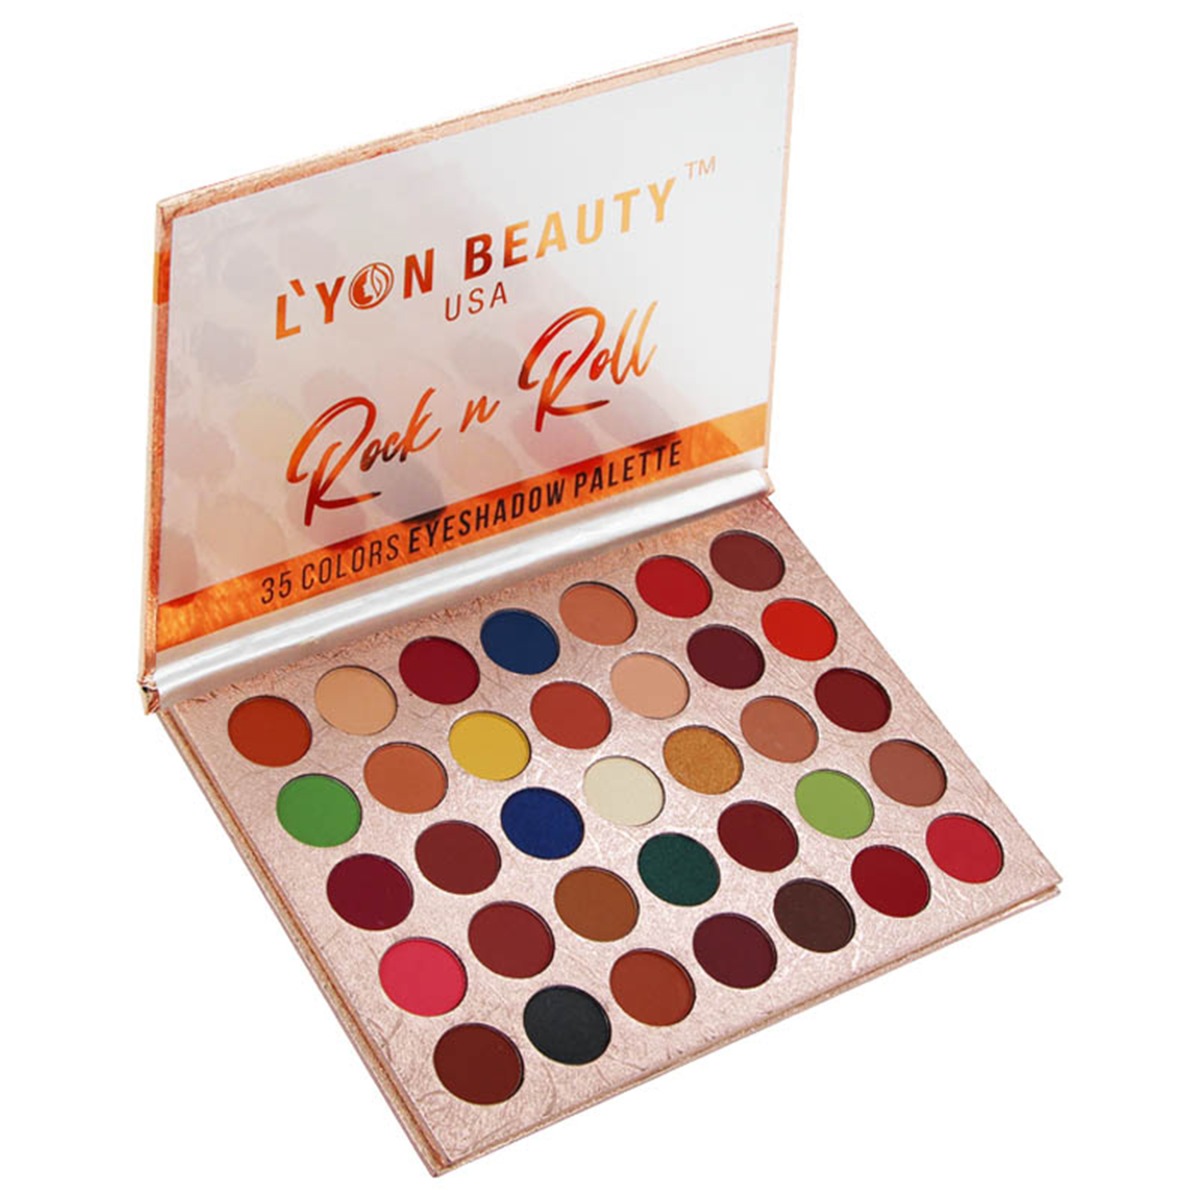 Lyon Beauty USA Rock N Roll 35 Colors Eyeshadow Palette, 1gm